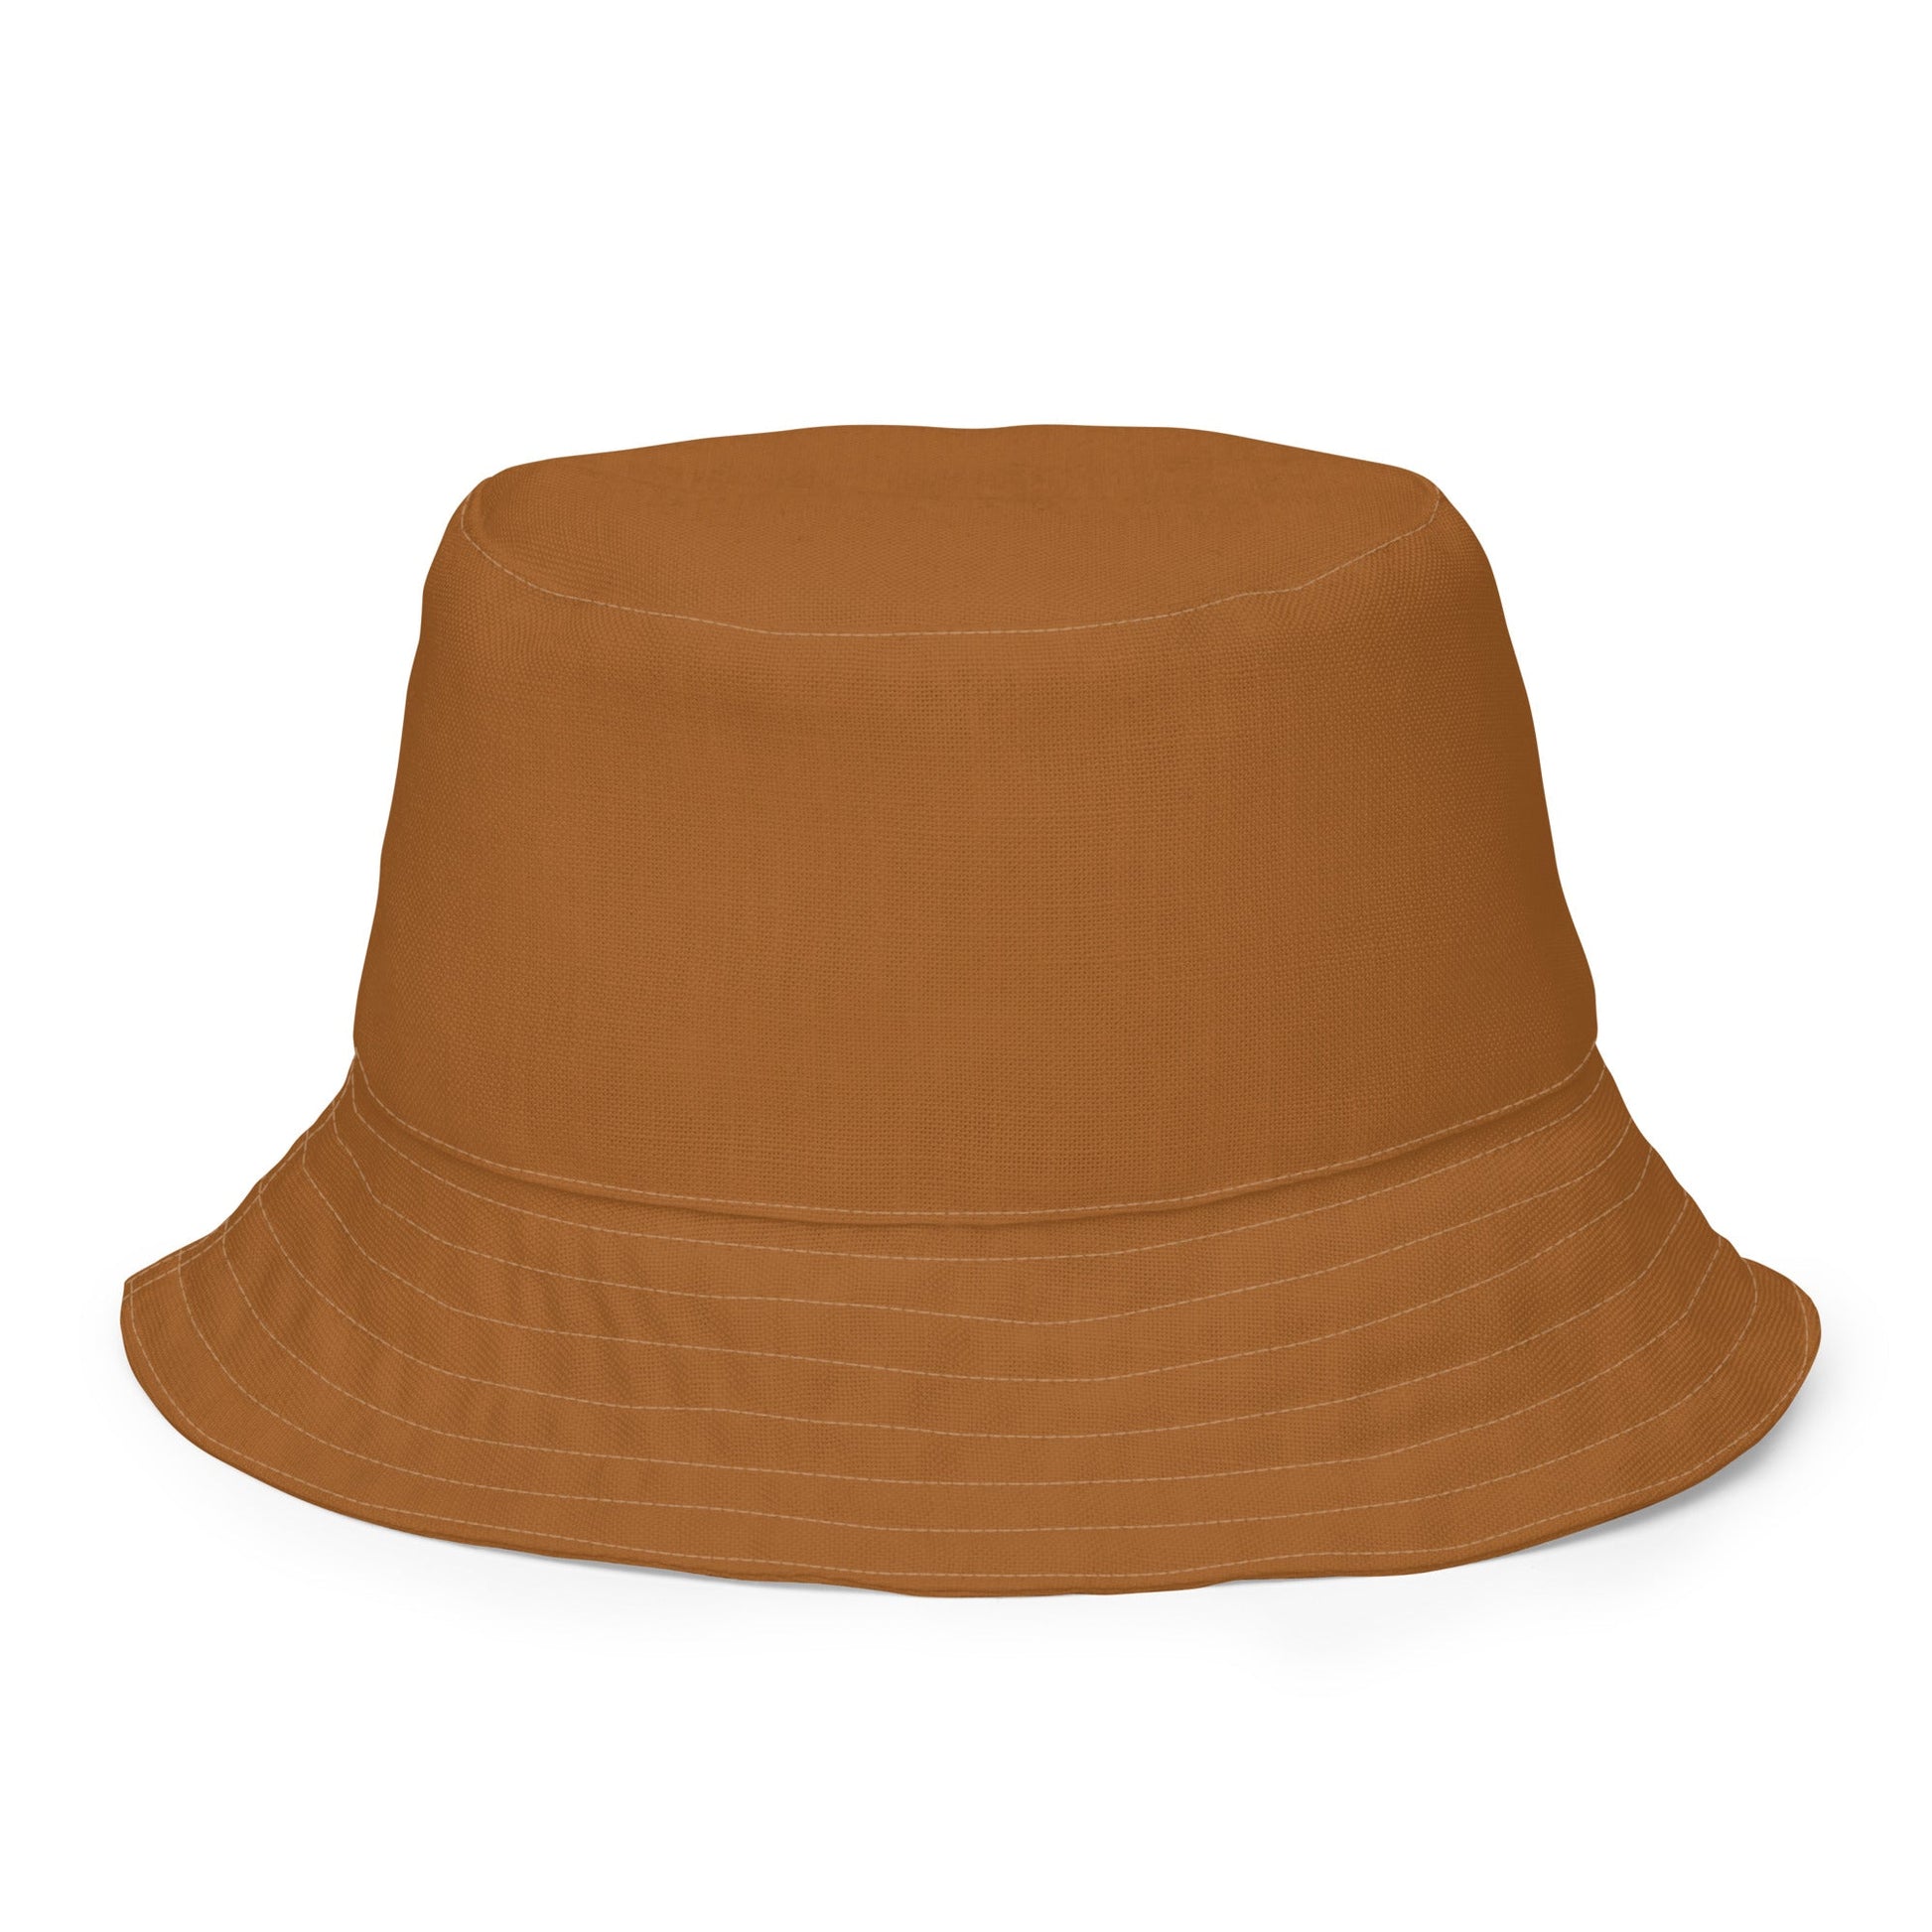 Fall Black and Tan Plaid Reversible bucket hat - Appalachian Bittersweet - bucket hat